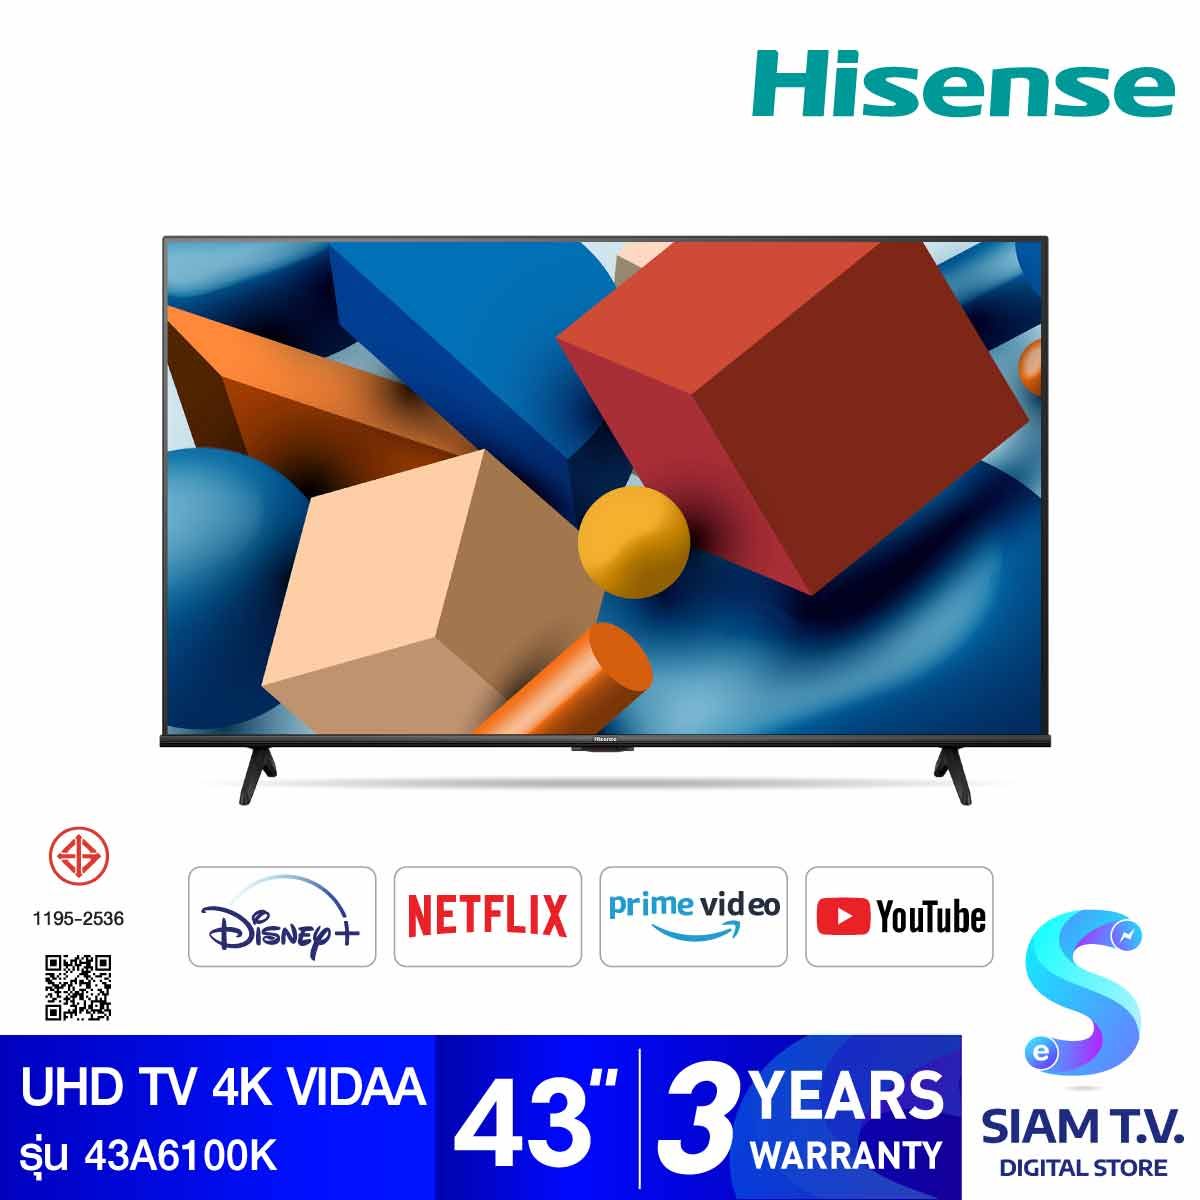 Hisense  LED UHD TV 4K VIDAA  รุ่น  43A6100K สมาร์ททีวี 4K ขนาด 43 นิ้ว